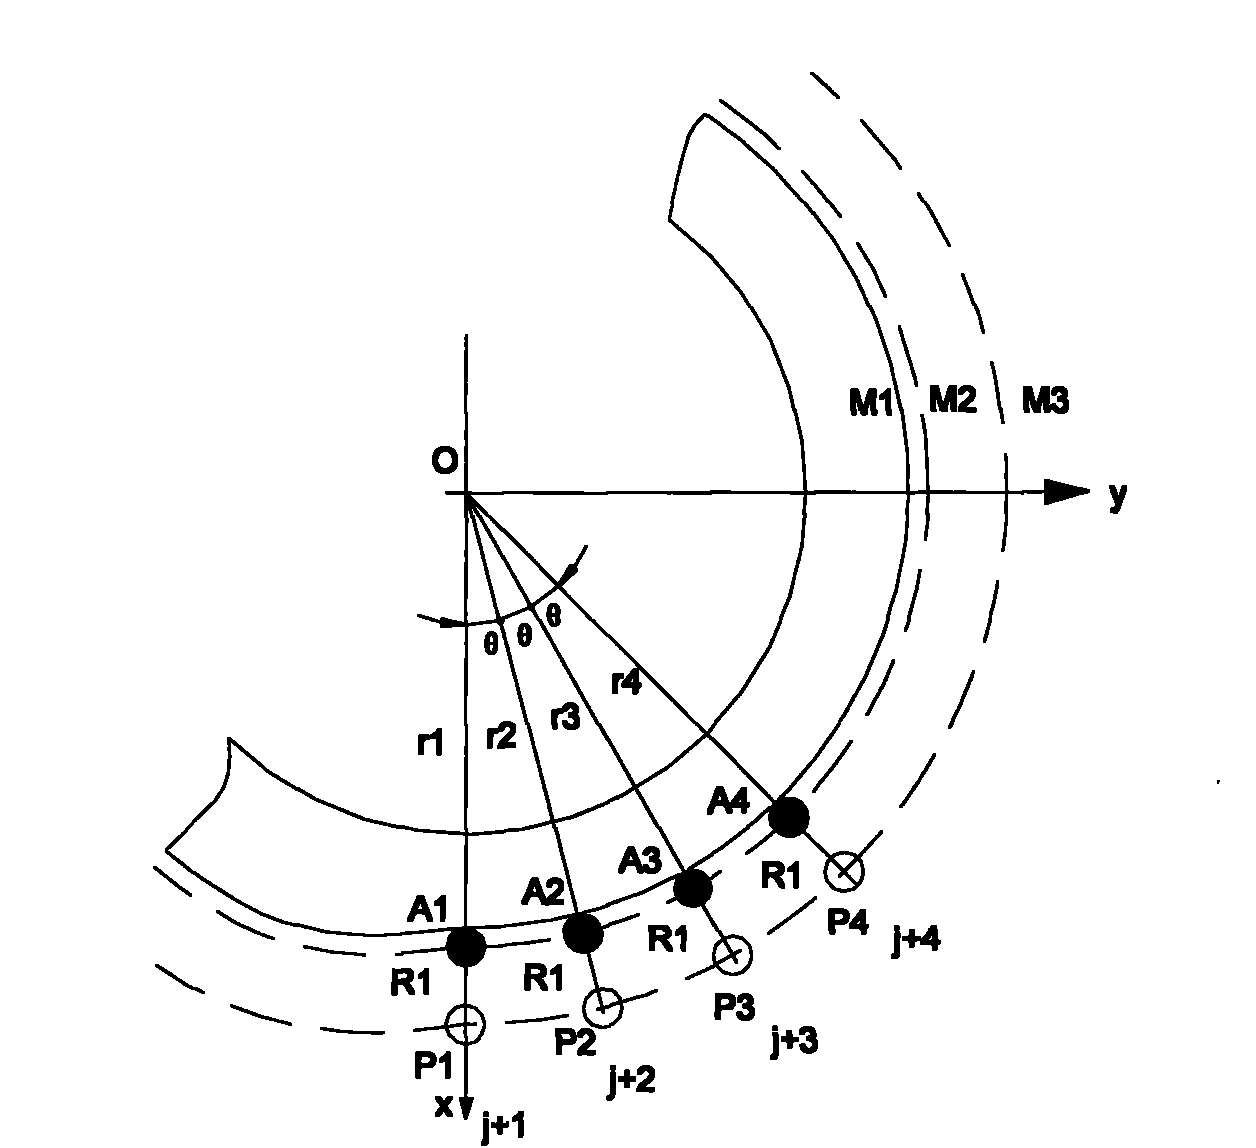 Identical graduation method for measuring contour curve of Archimedes screw cam